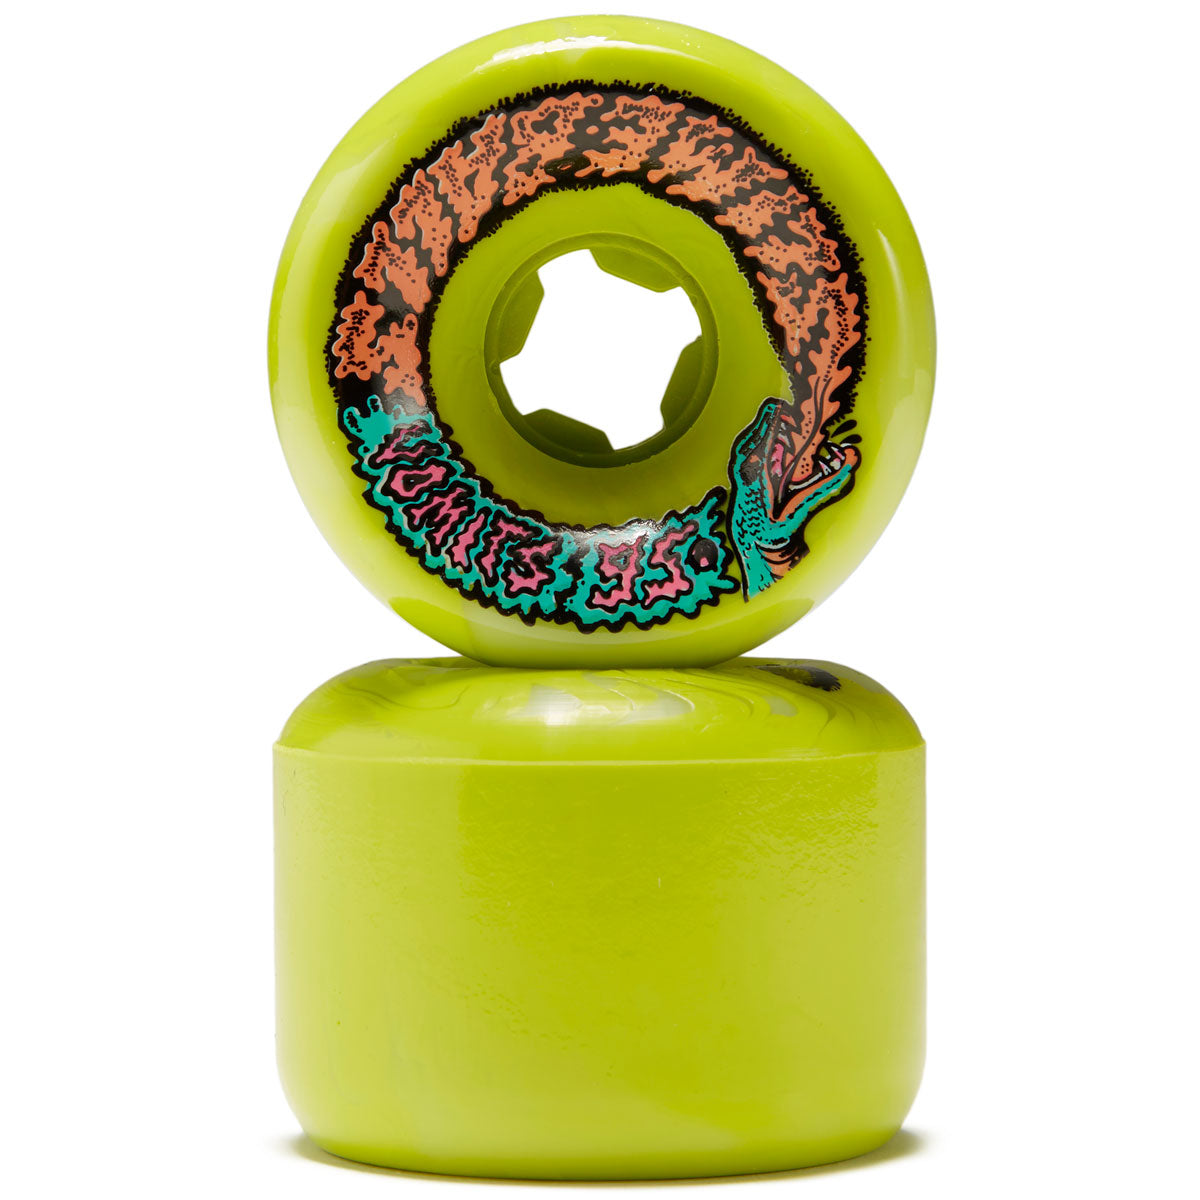 Slime Balls Snake Vomits 95a Skateboard Wheels - Green/White Swirl - 60mm image 2